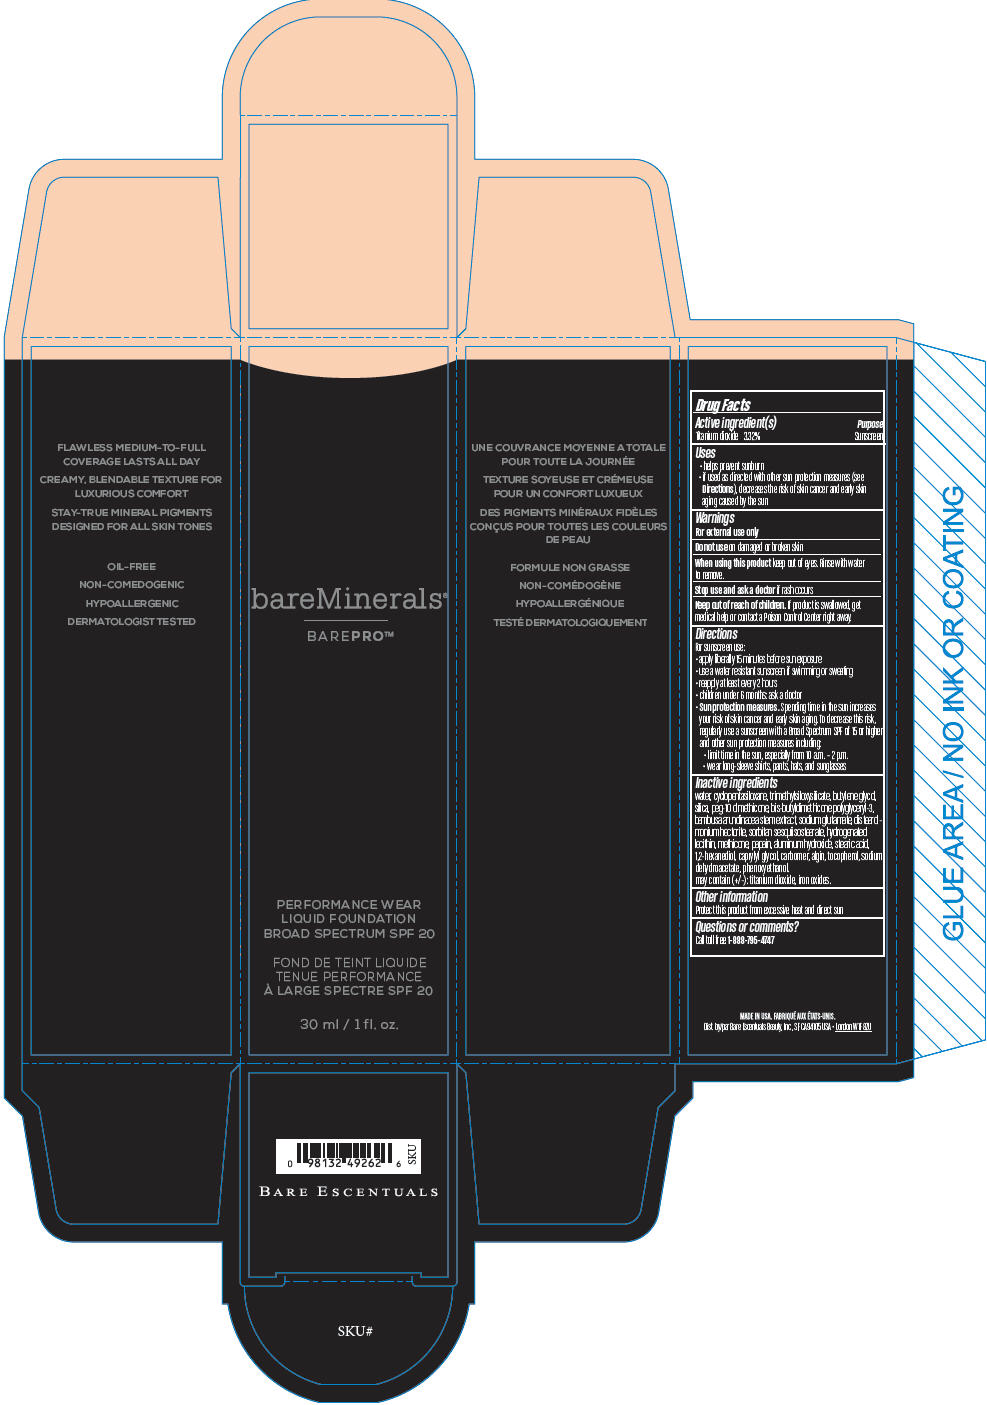 PRINCIPAL DISPLAY PANEL - 30 ml Bottle Carton - Sandstone 16